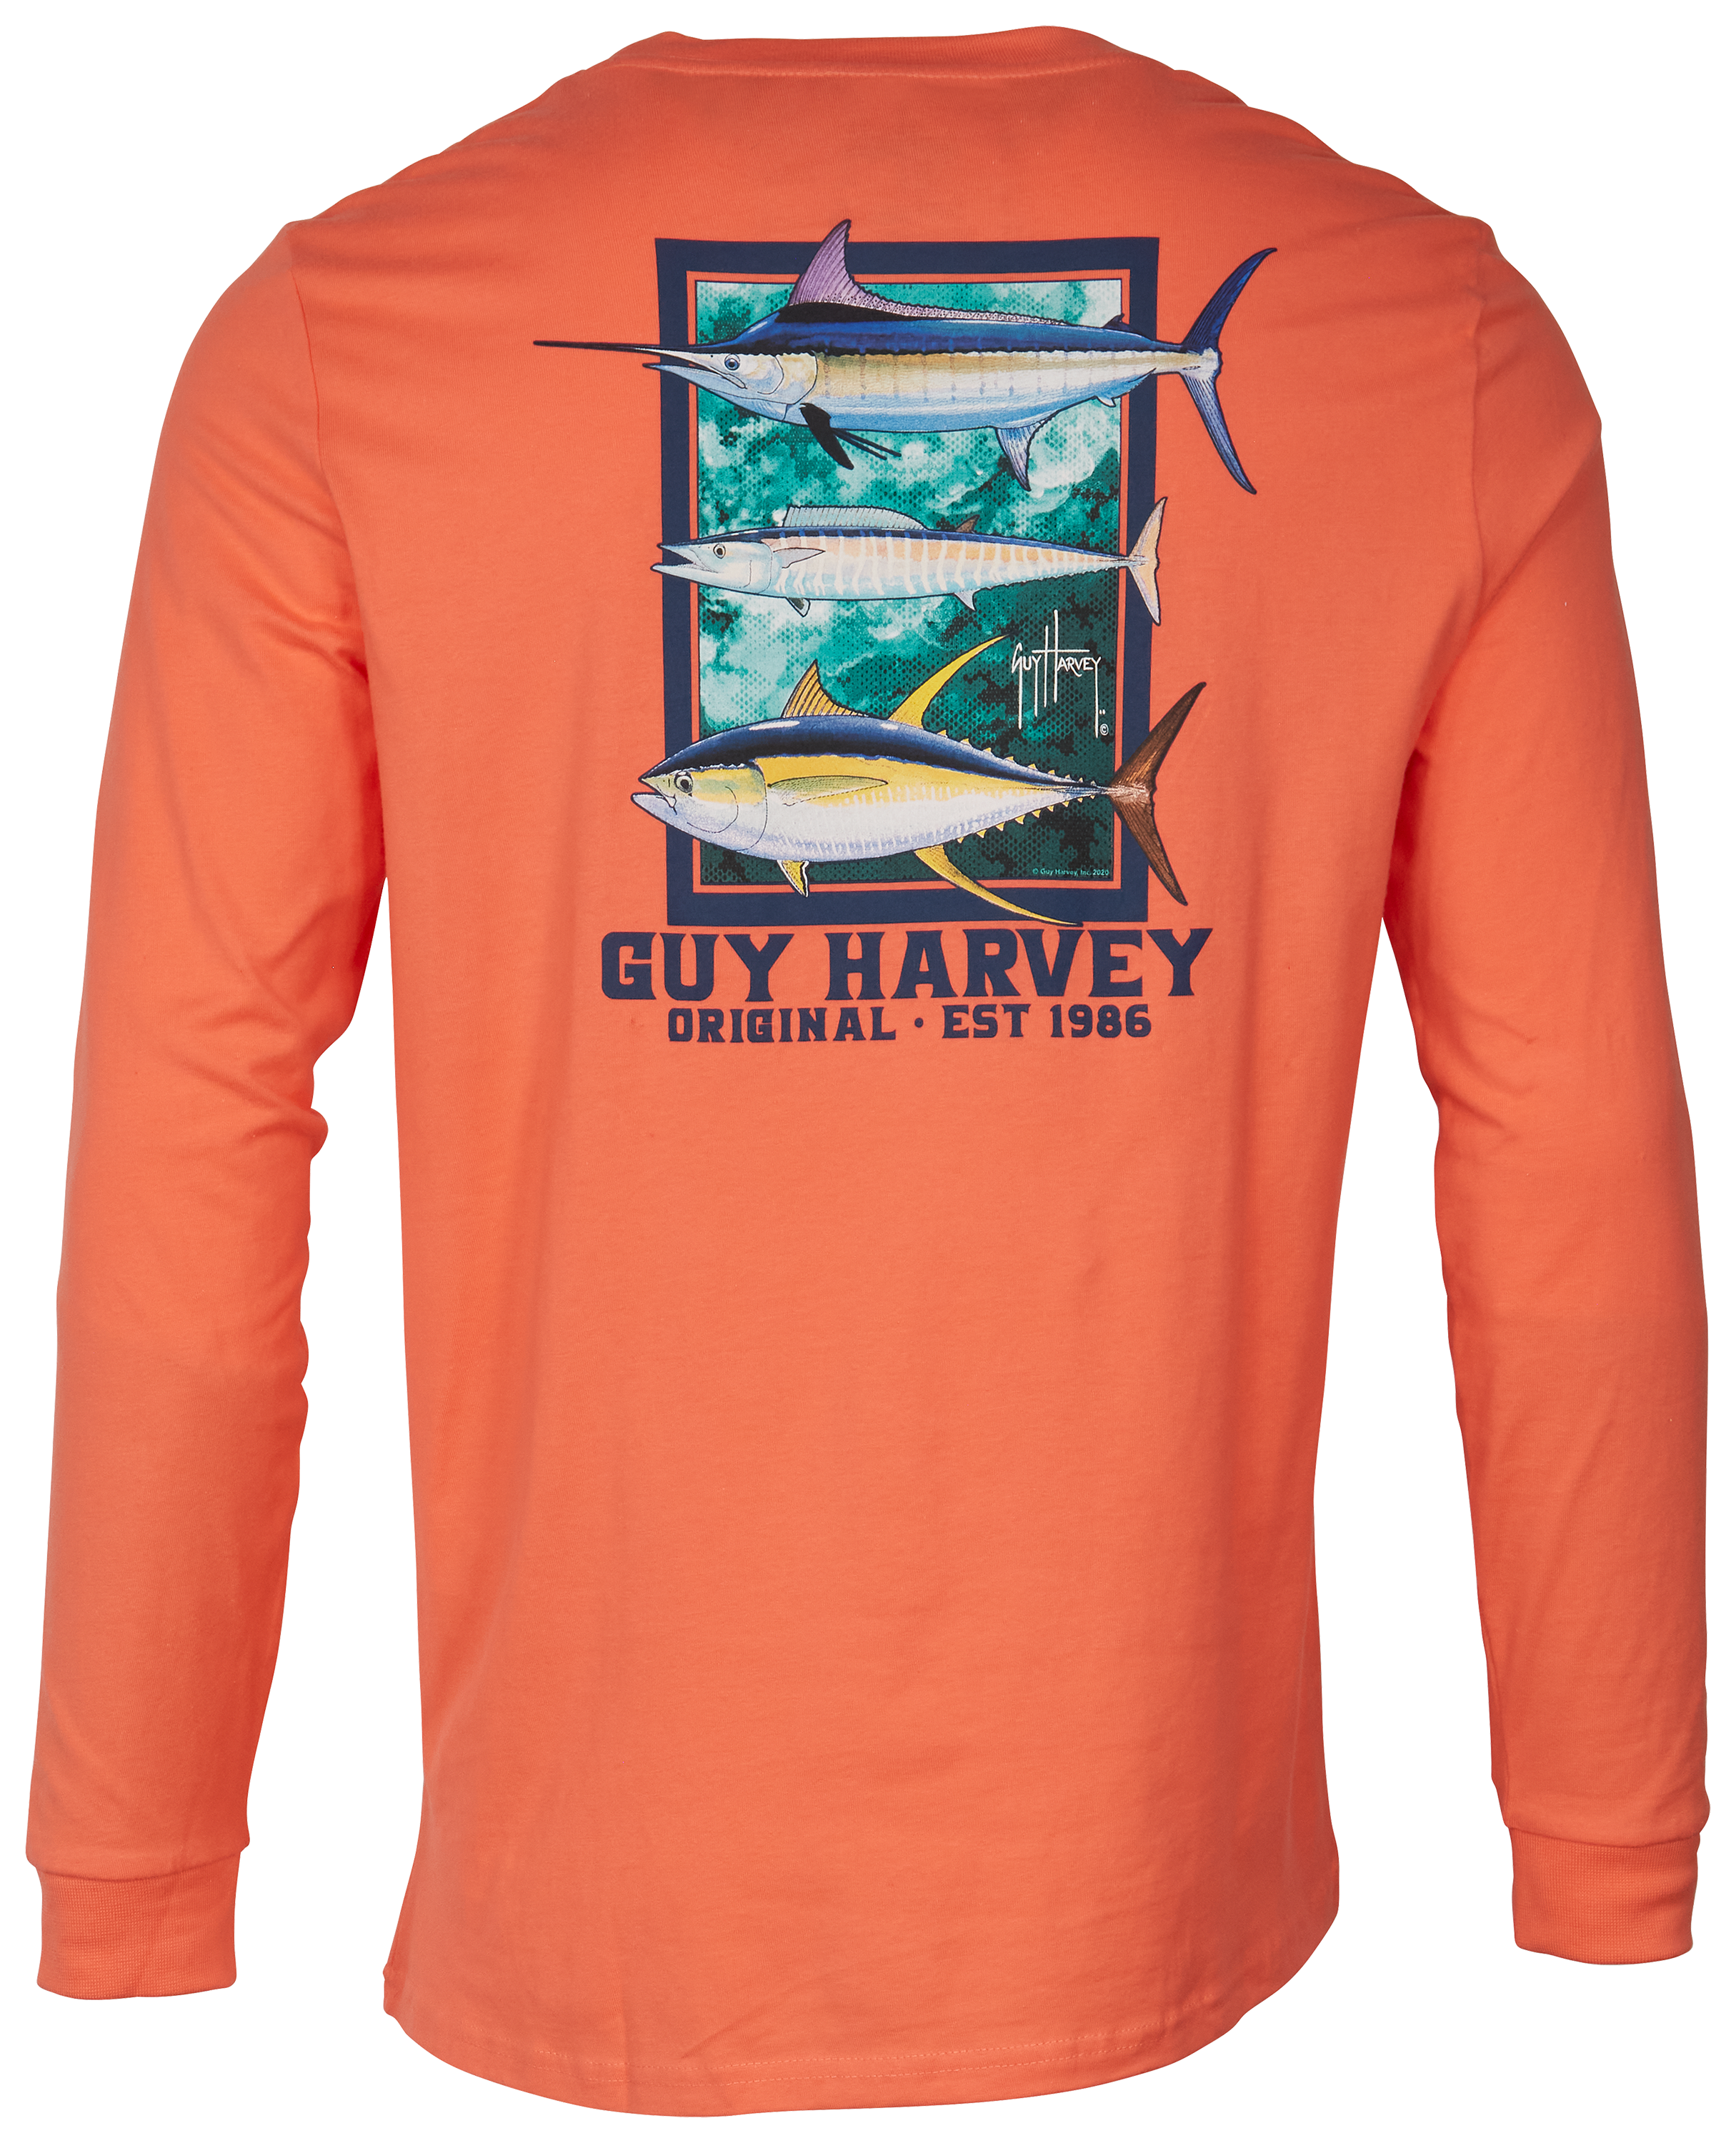 Guy Harvey Men's Long Sleeve Fishing Tee Shirt